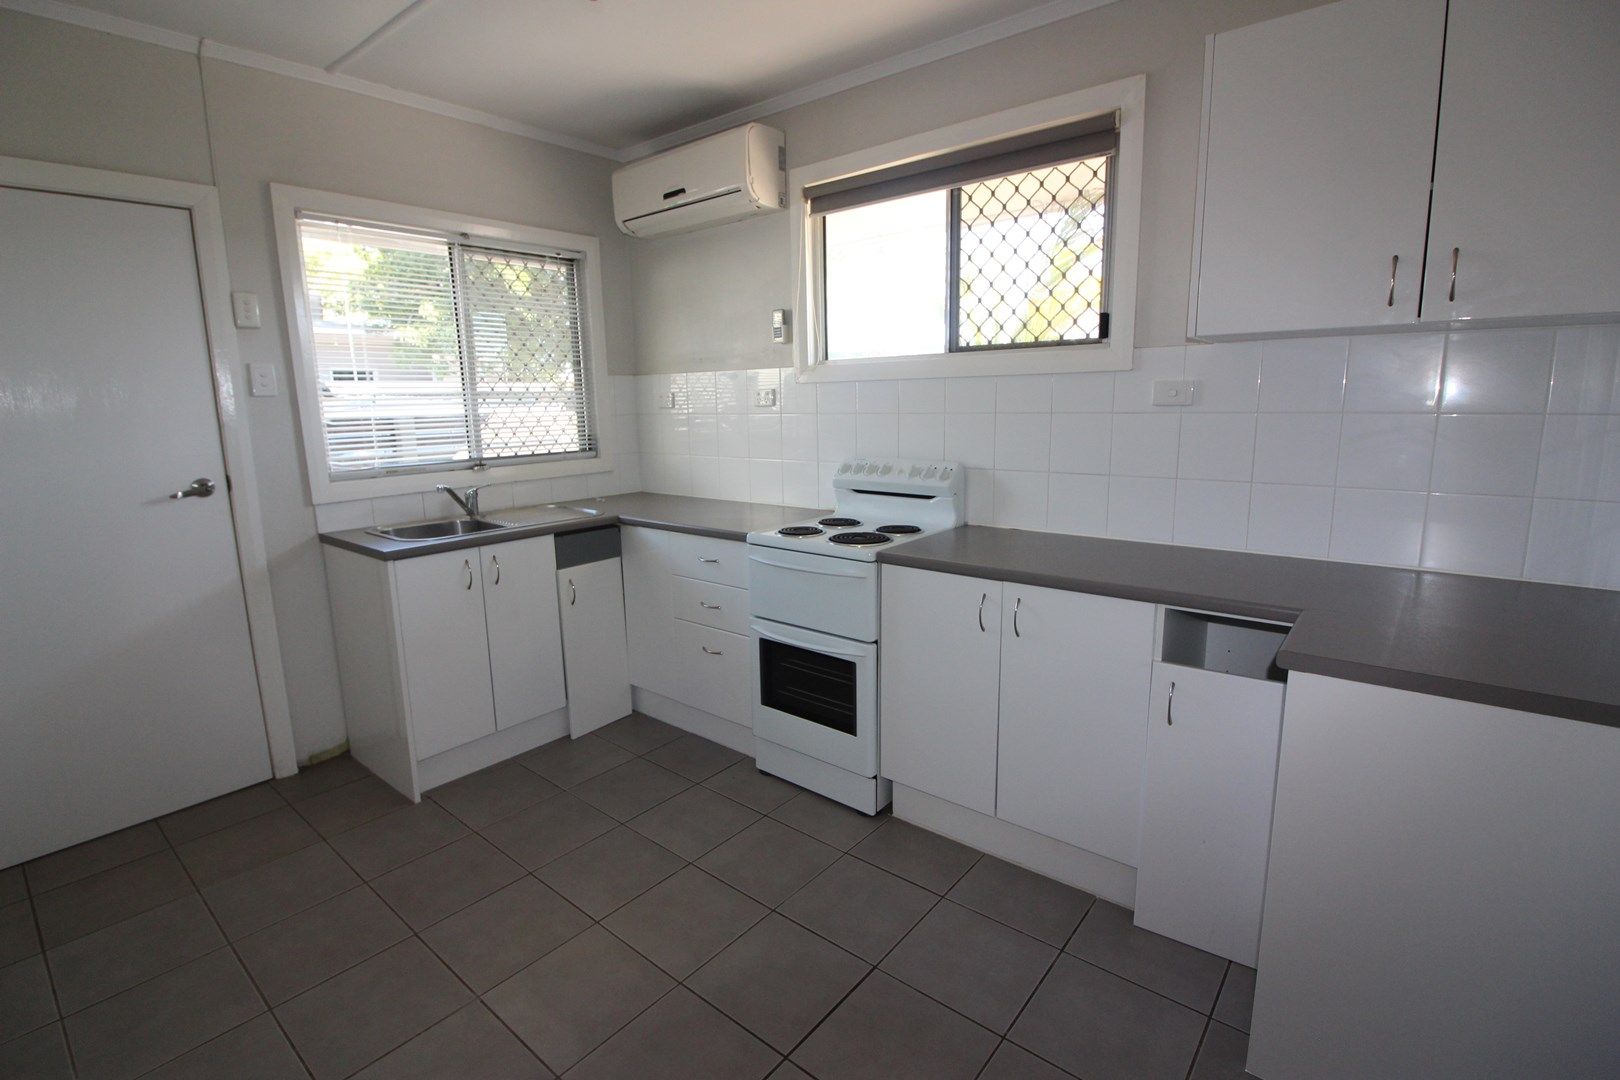 2 bedrooms Apartment / Unit / Flat in 2/61 Joan Street MOUNT ISA QLD, 4825